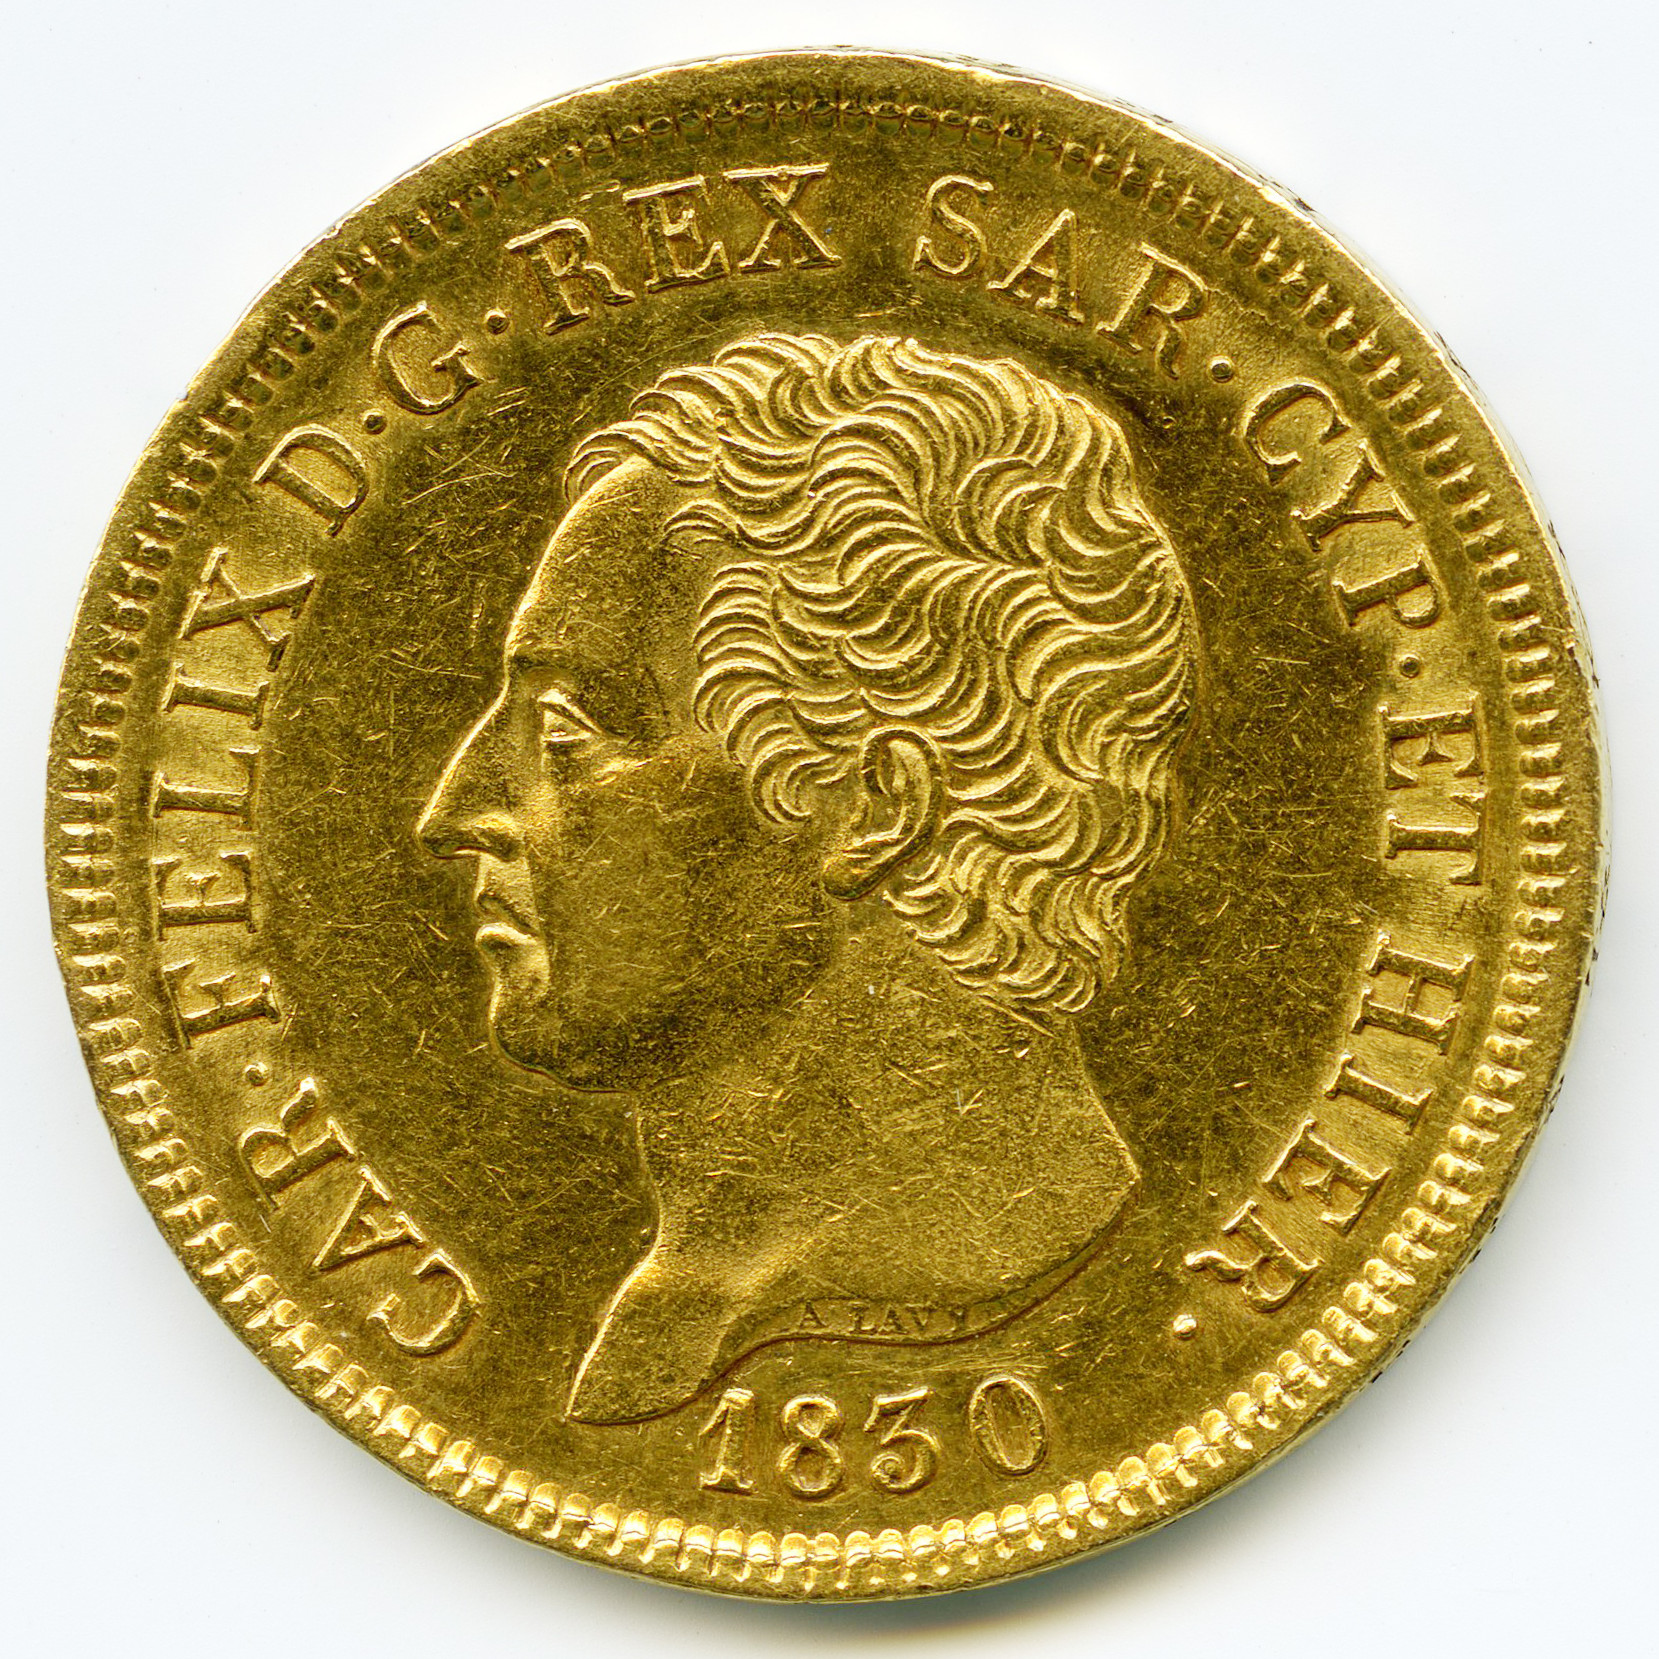 Italie - 80 Lire - 1830 avers